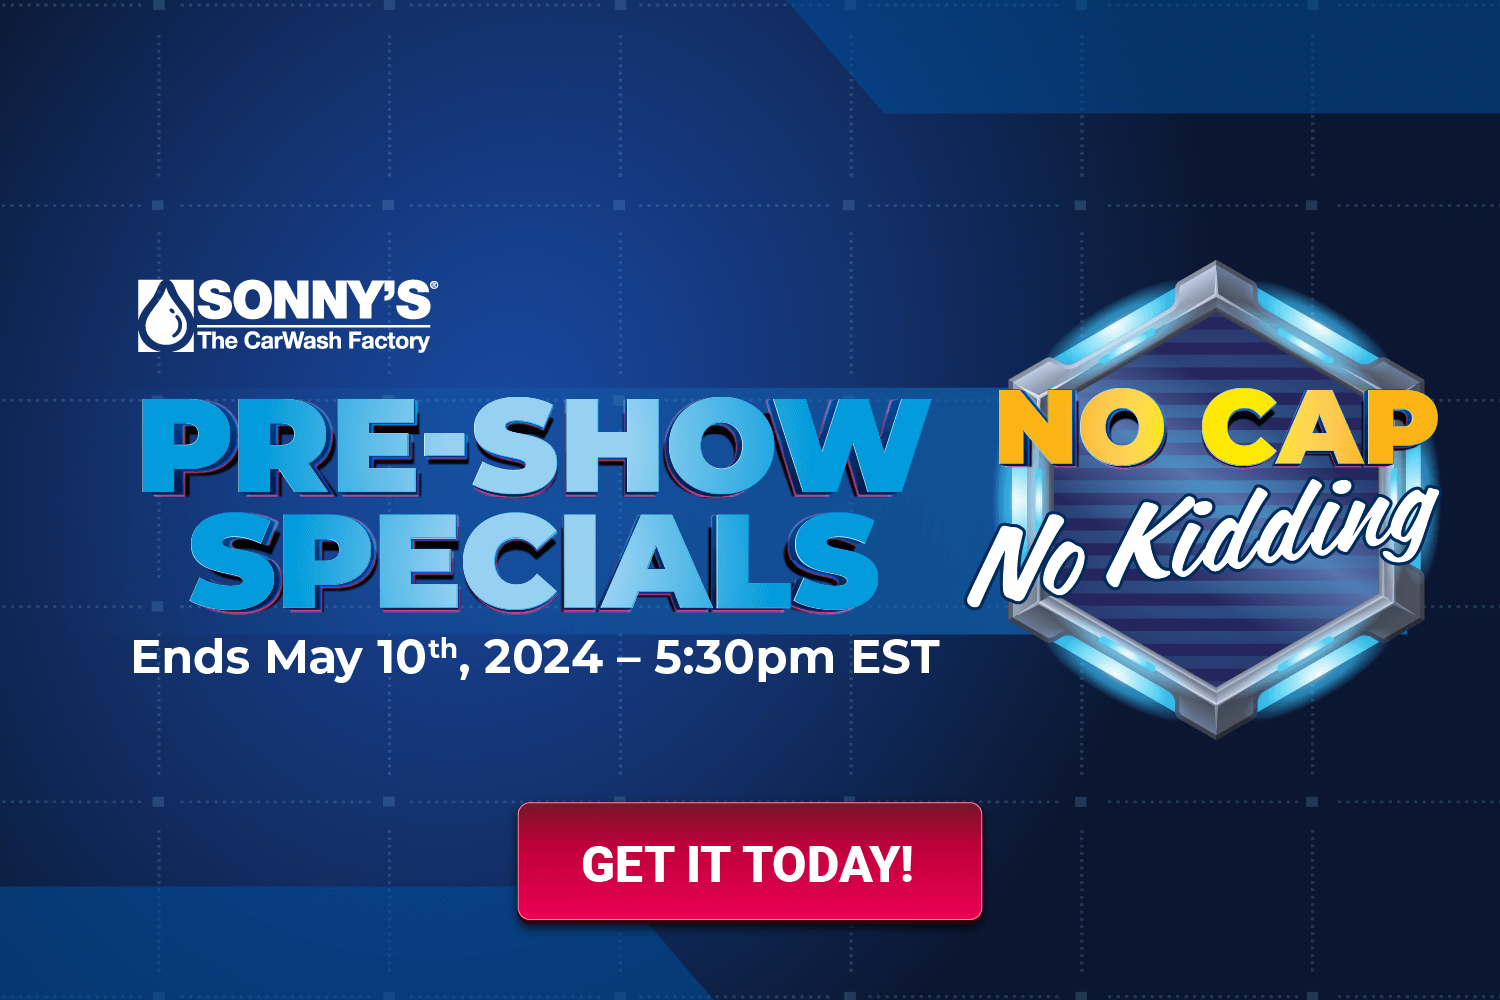 Sonny's Pre-Show Specials. No Cap. No Kidding! Ends May 10th at 5:30pm